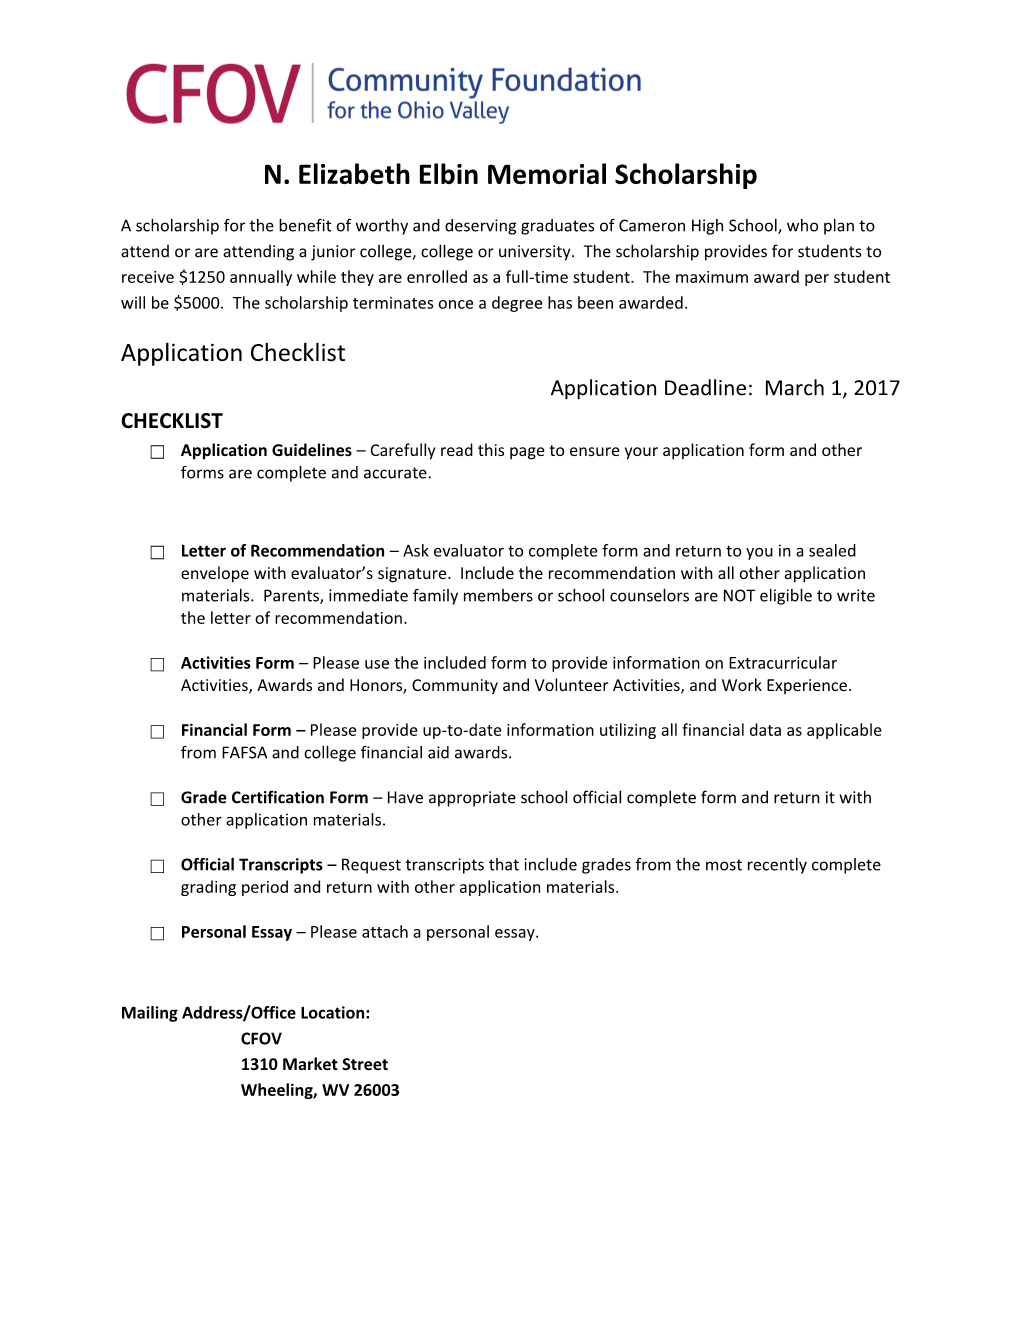 N. Elizabeth Elbin Memorial Scholarship